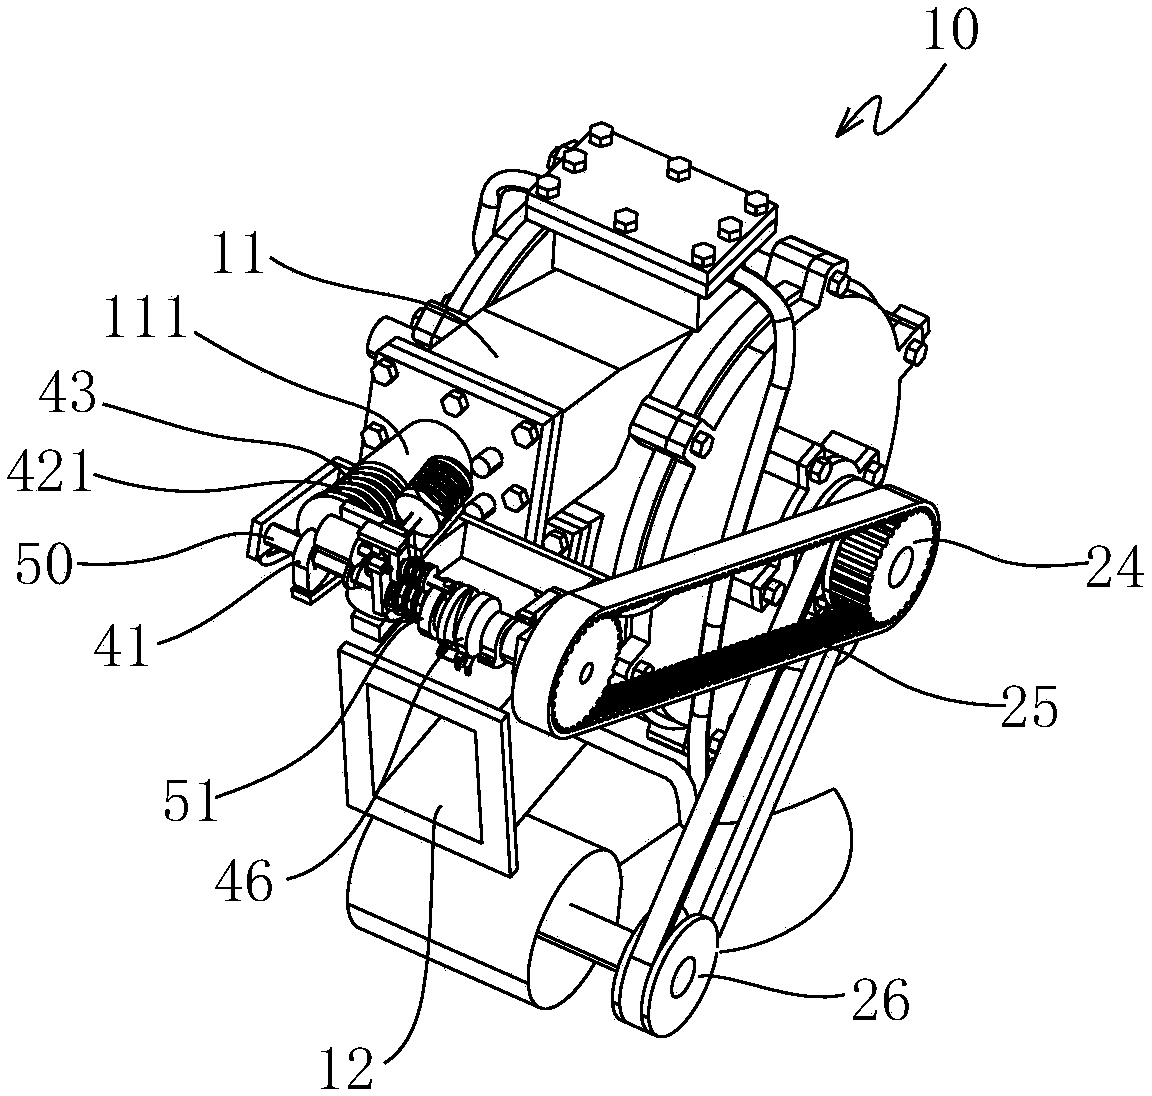 Intake mechanism of rotary engine